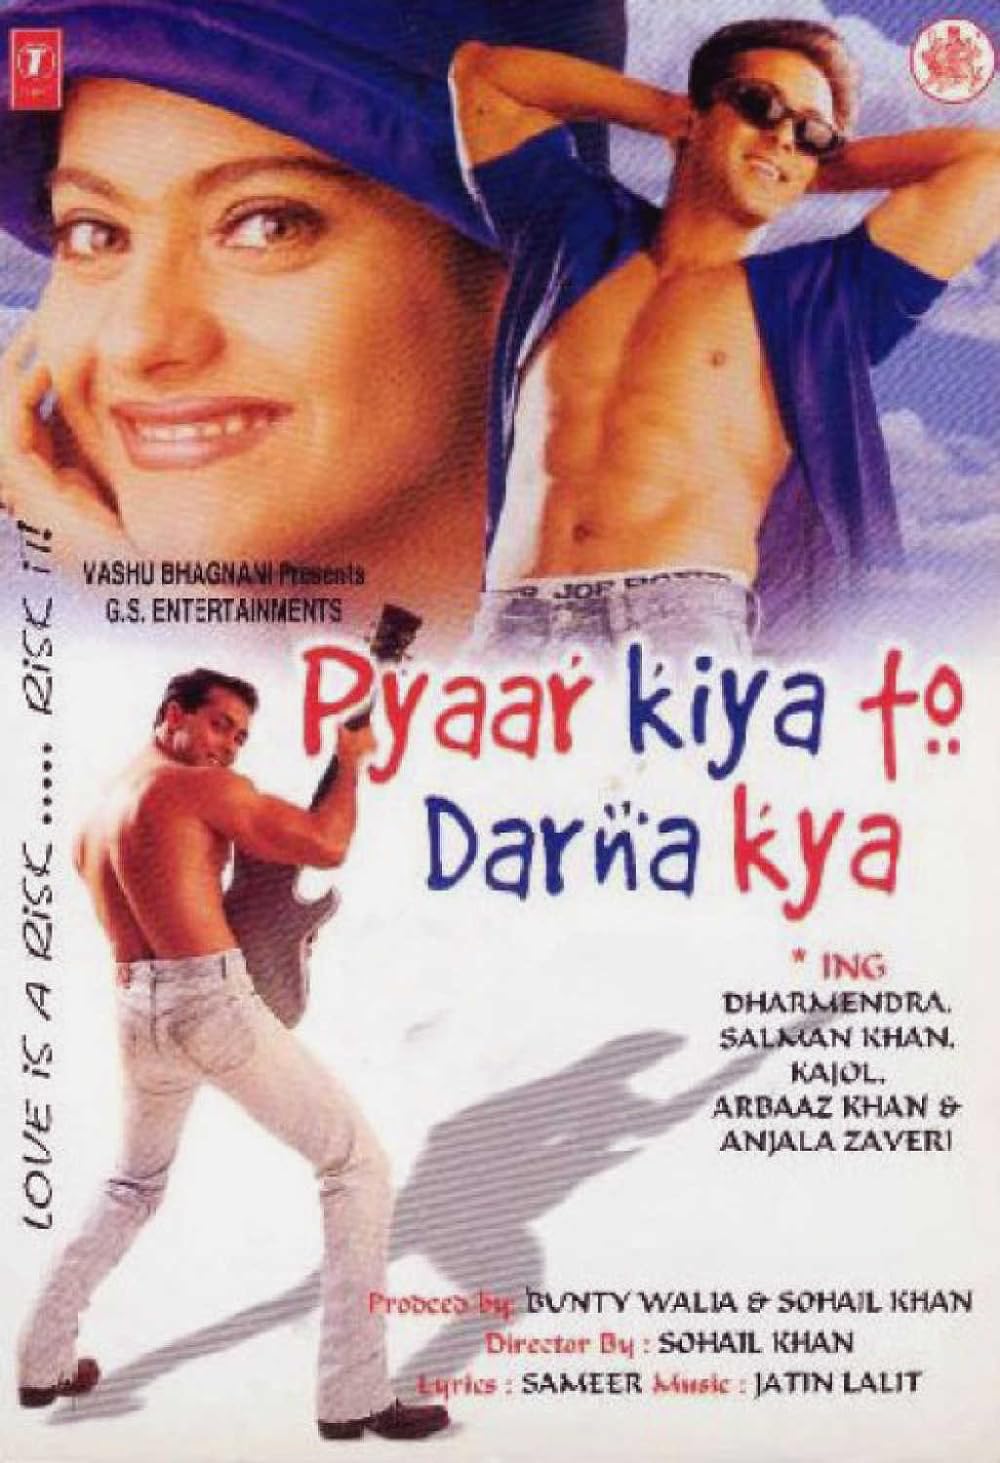 assets/img/movie/Pyaar Kiya To Darna Kya 1998.jpg 9xmovies